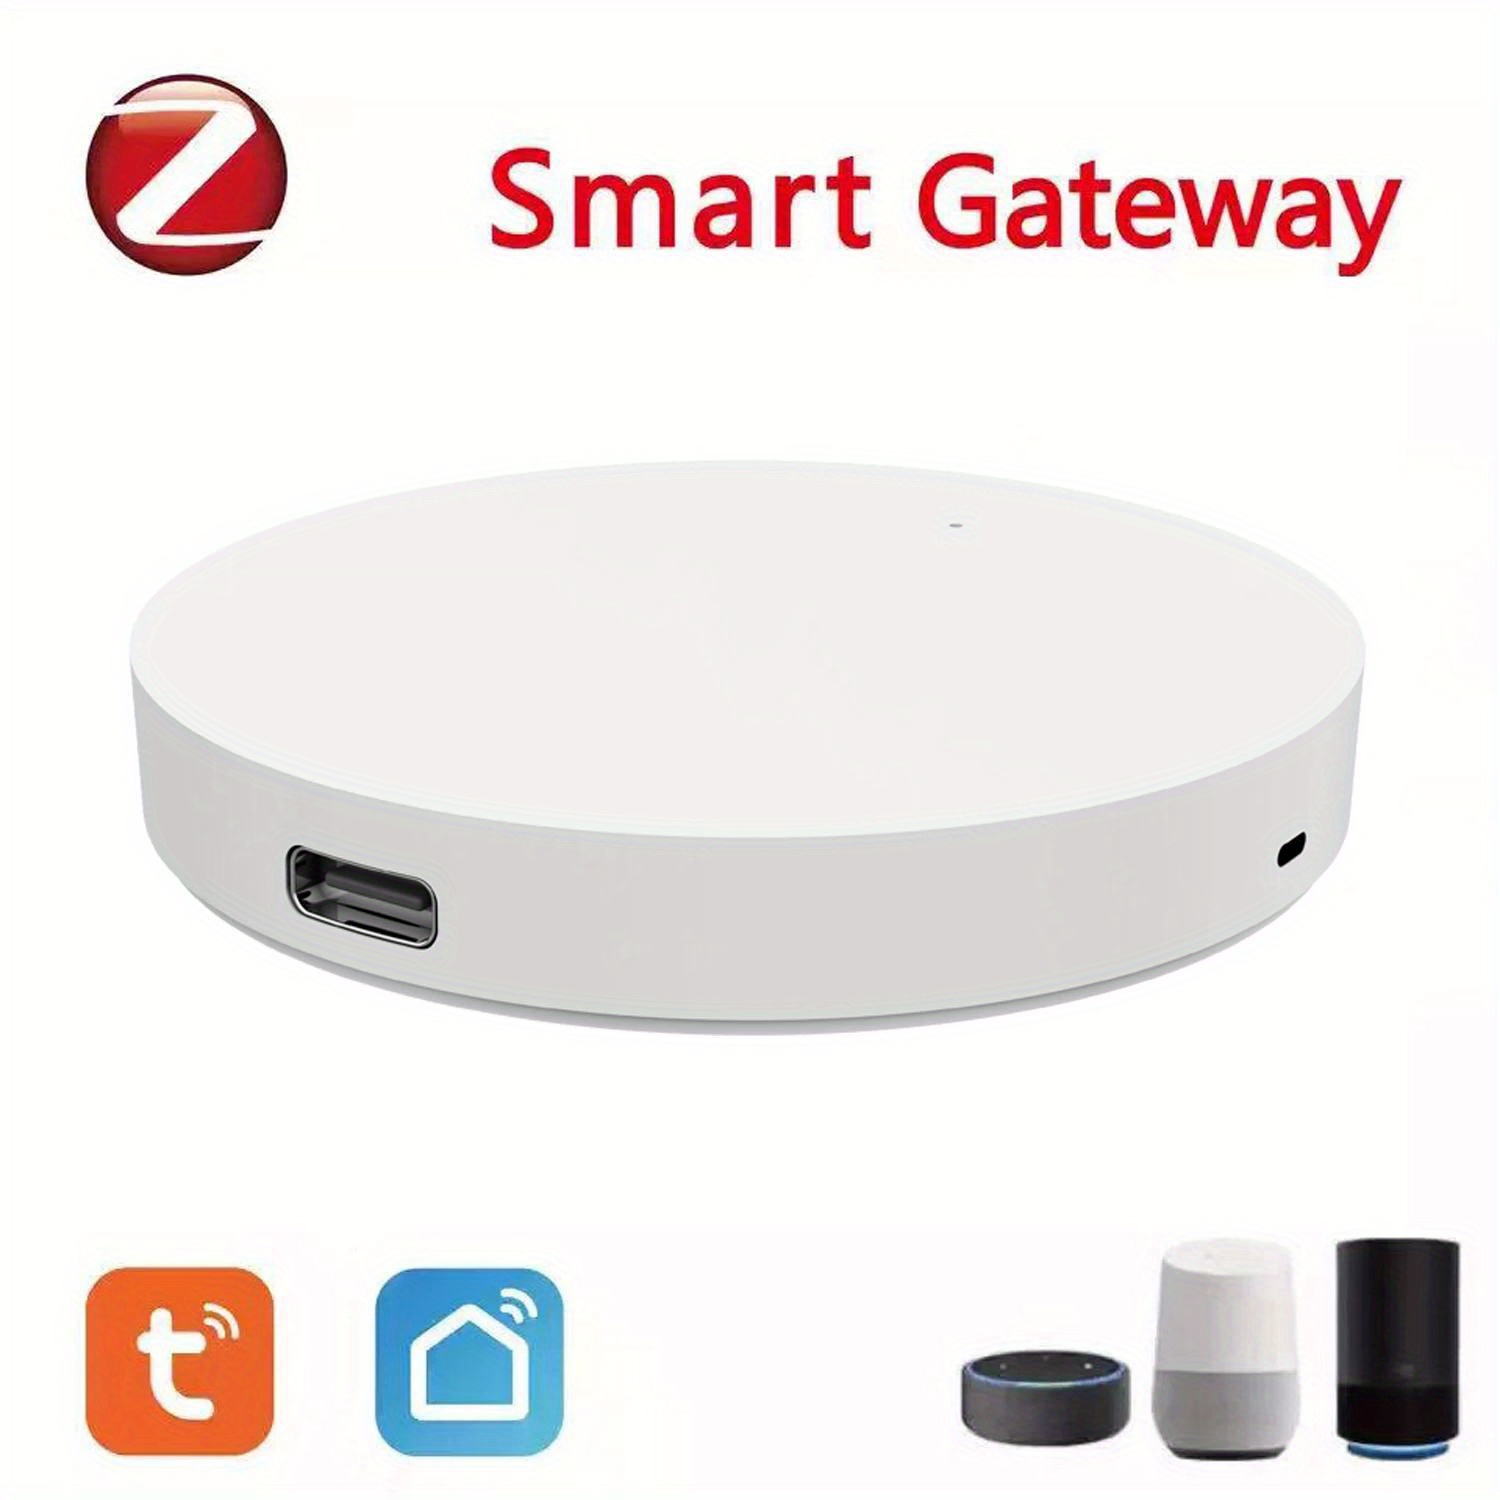 Tuya ZigBee 3.0 Smart Gateway Hub Smart Life APP Wireless Remote Controller  New